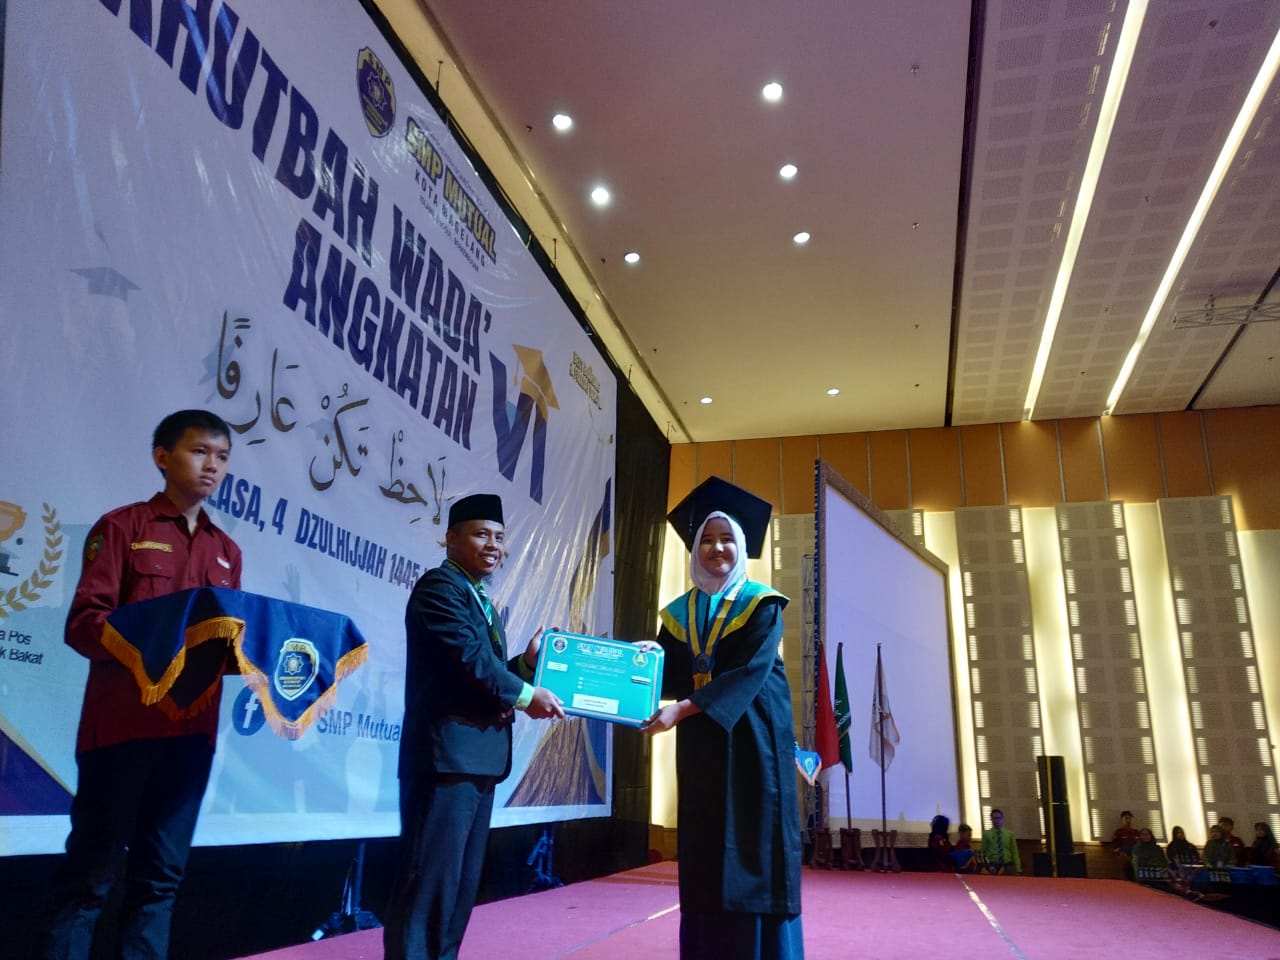 100 Persen Siswanya Lulus, SMP Mutual Kota Magelang Gelar Khutbah Wada'